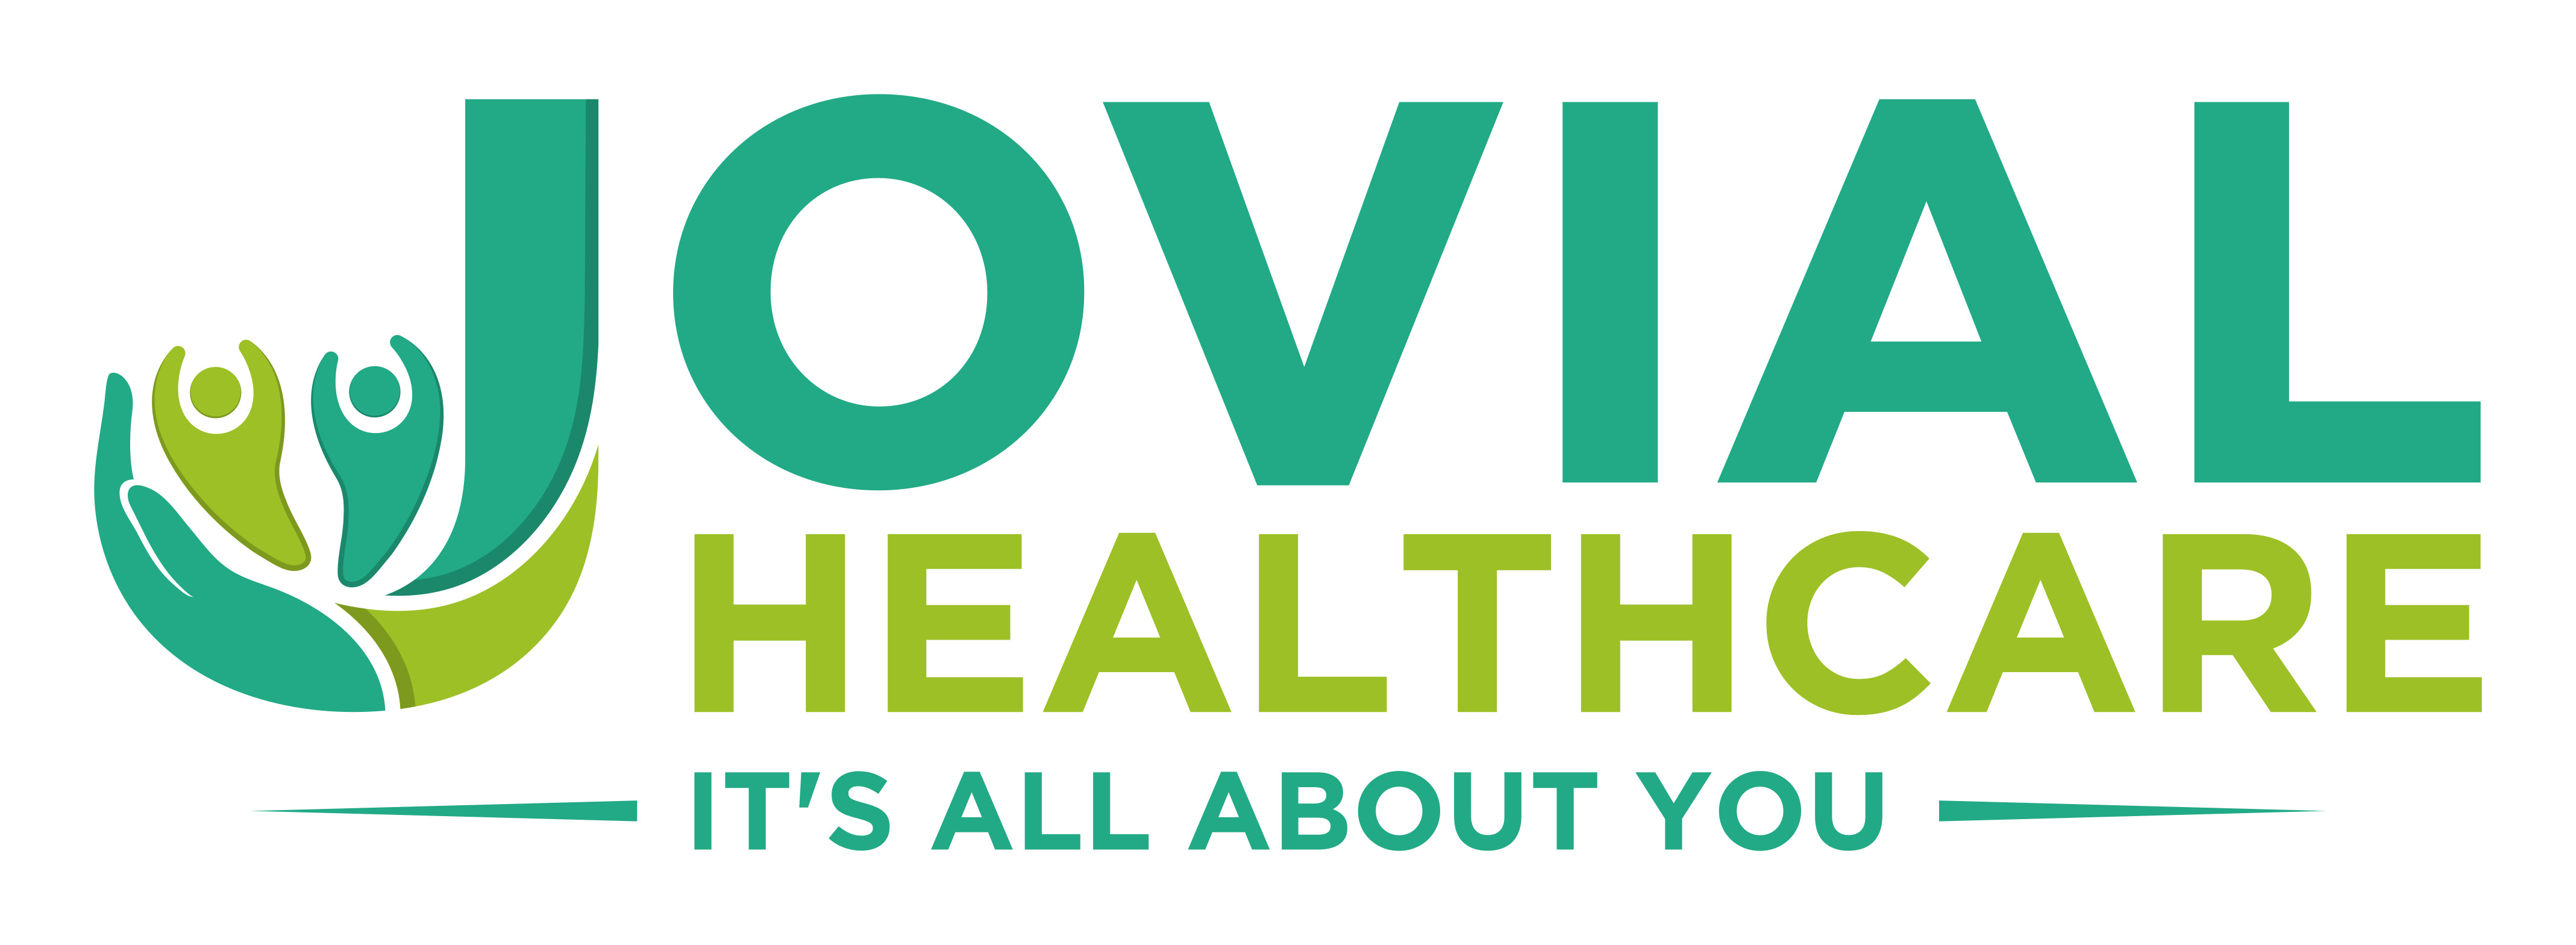 Jovials Health Care